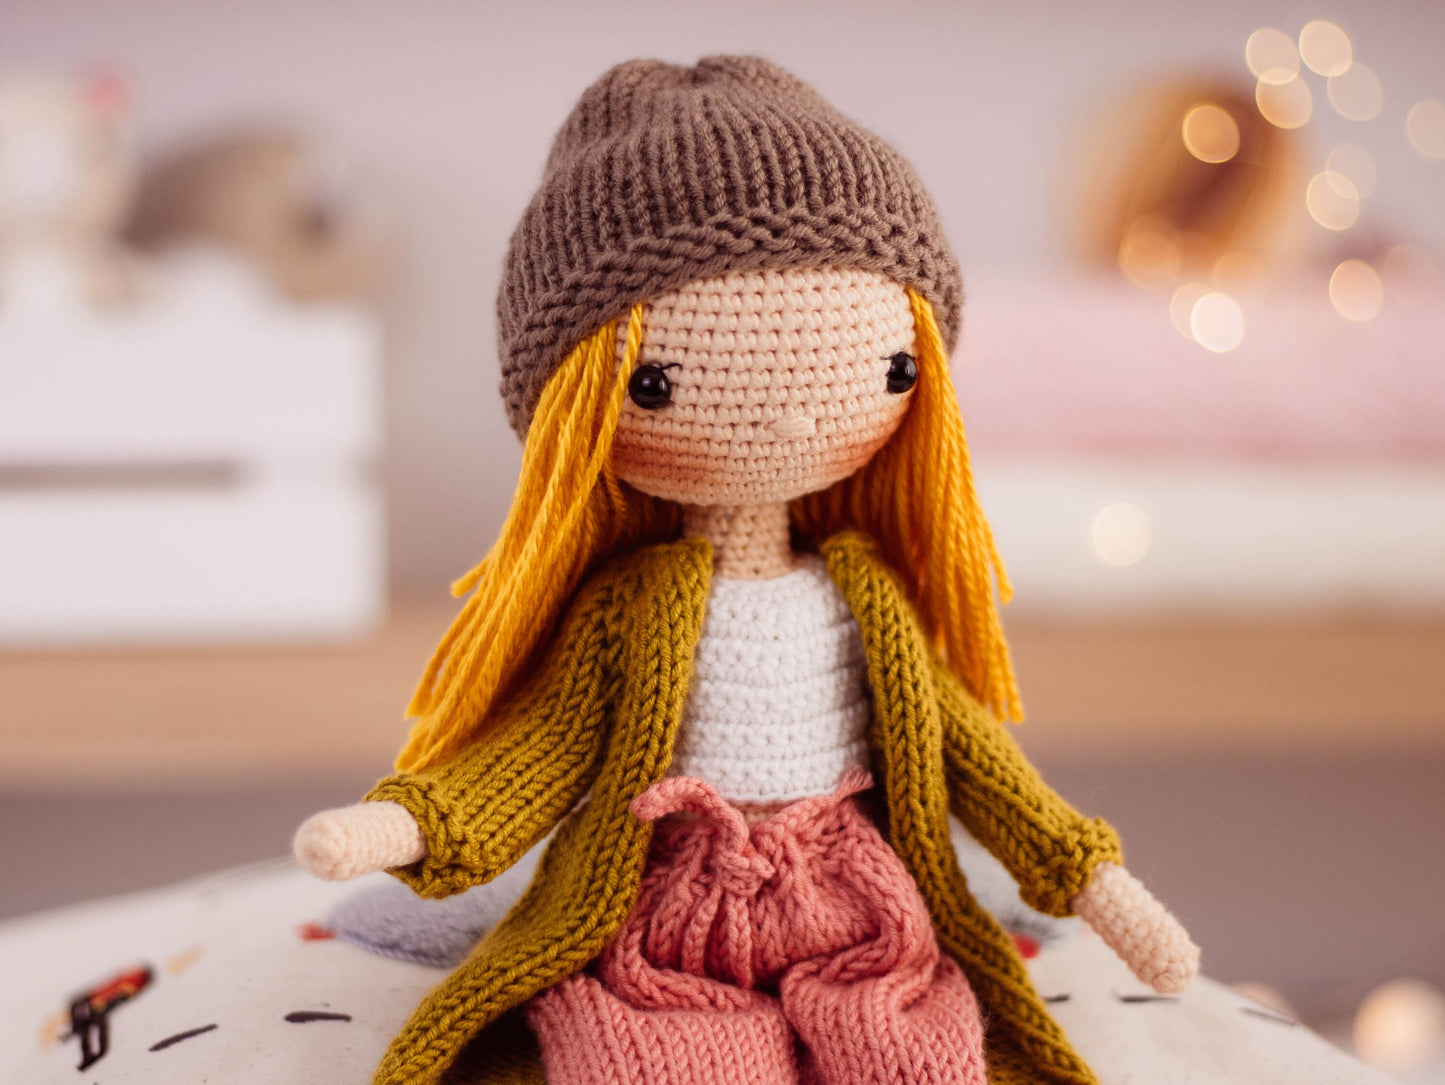 Crochet Doll New York Girl, Amigurumi Doll Finished